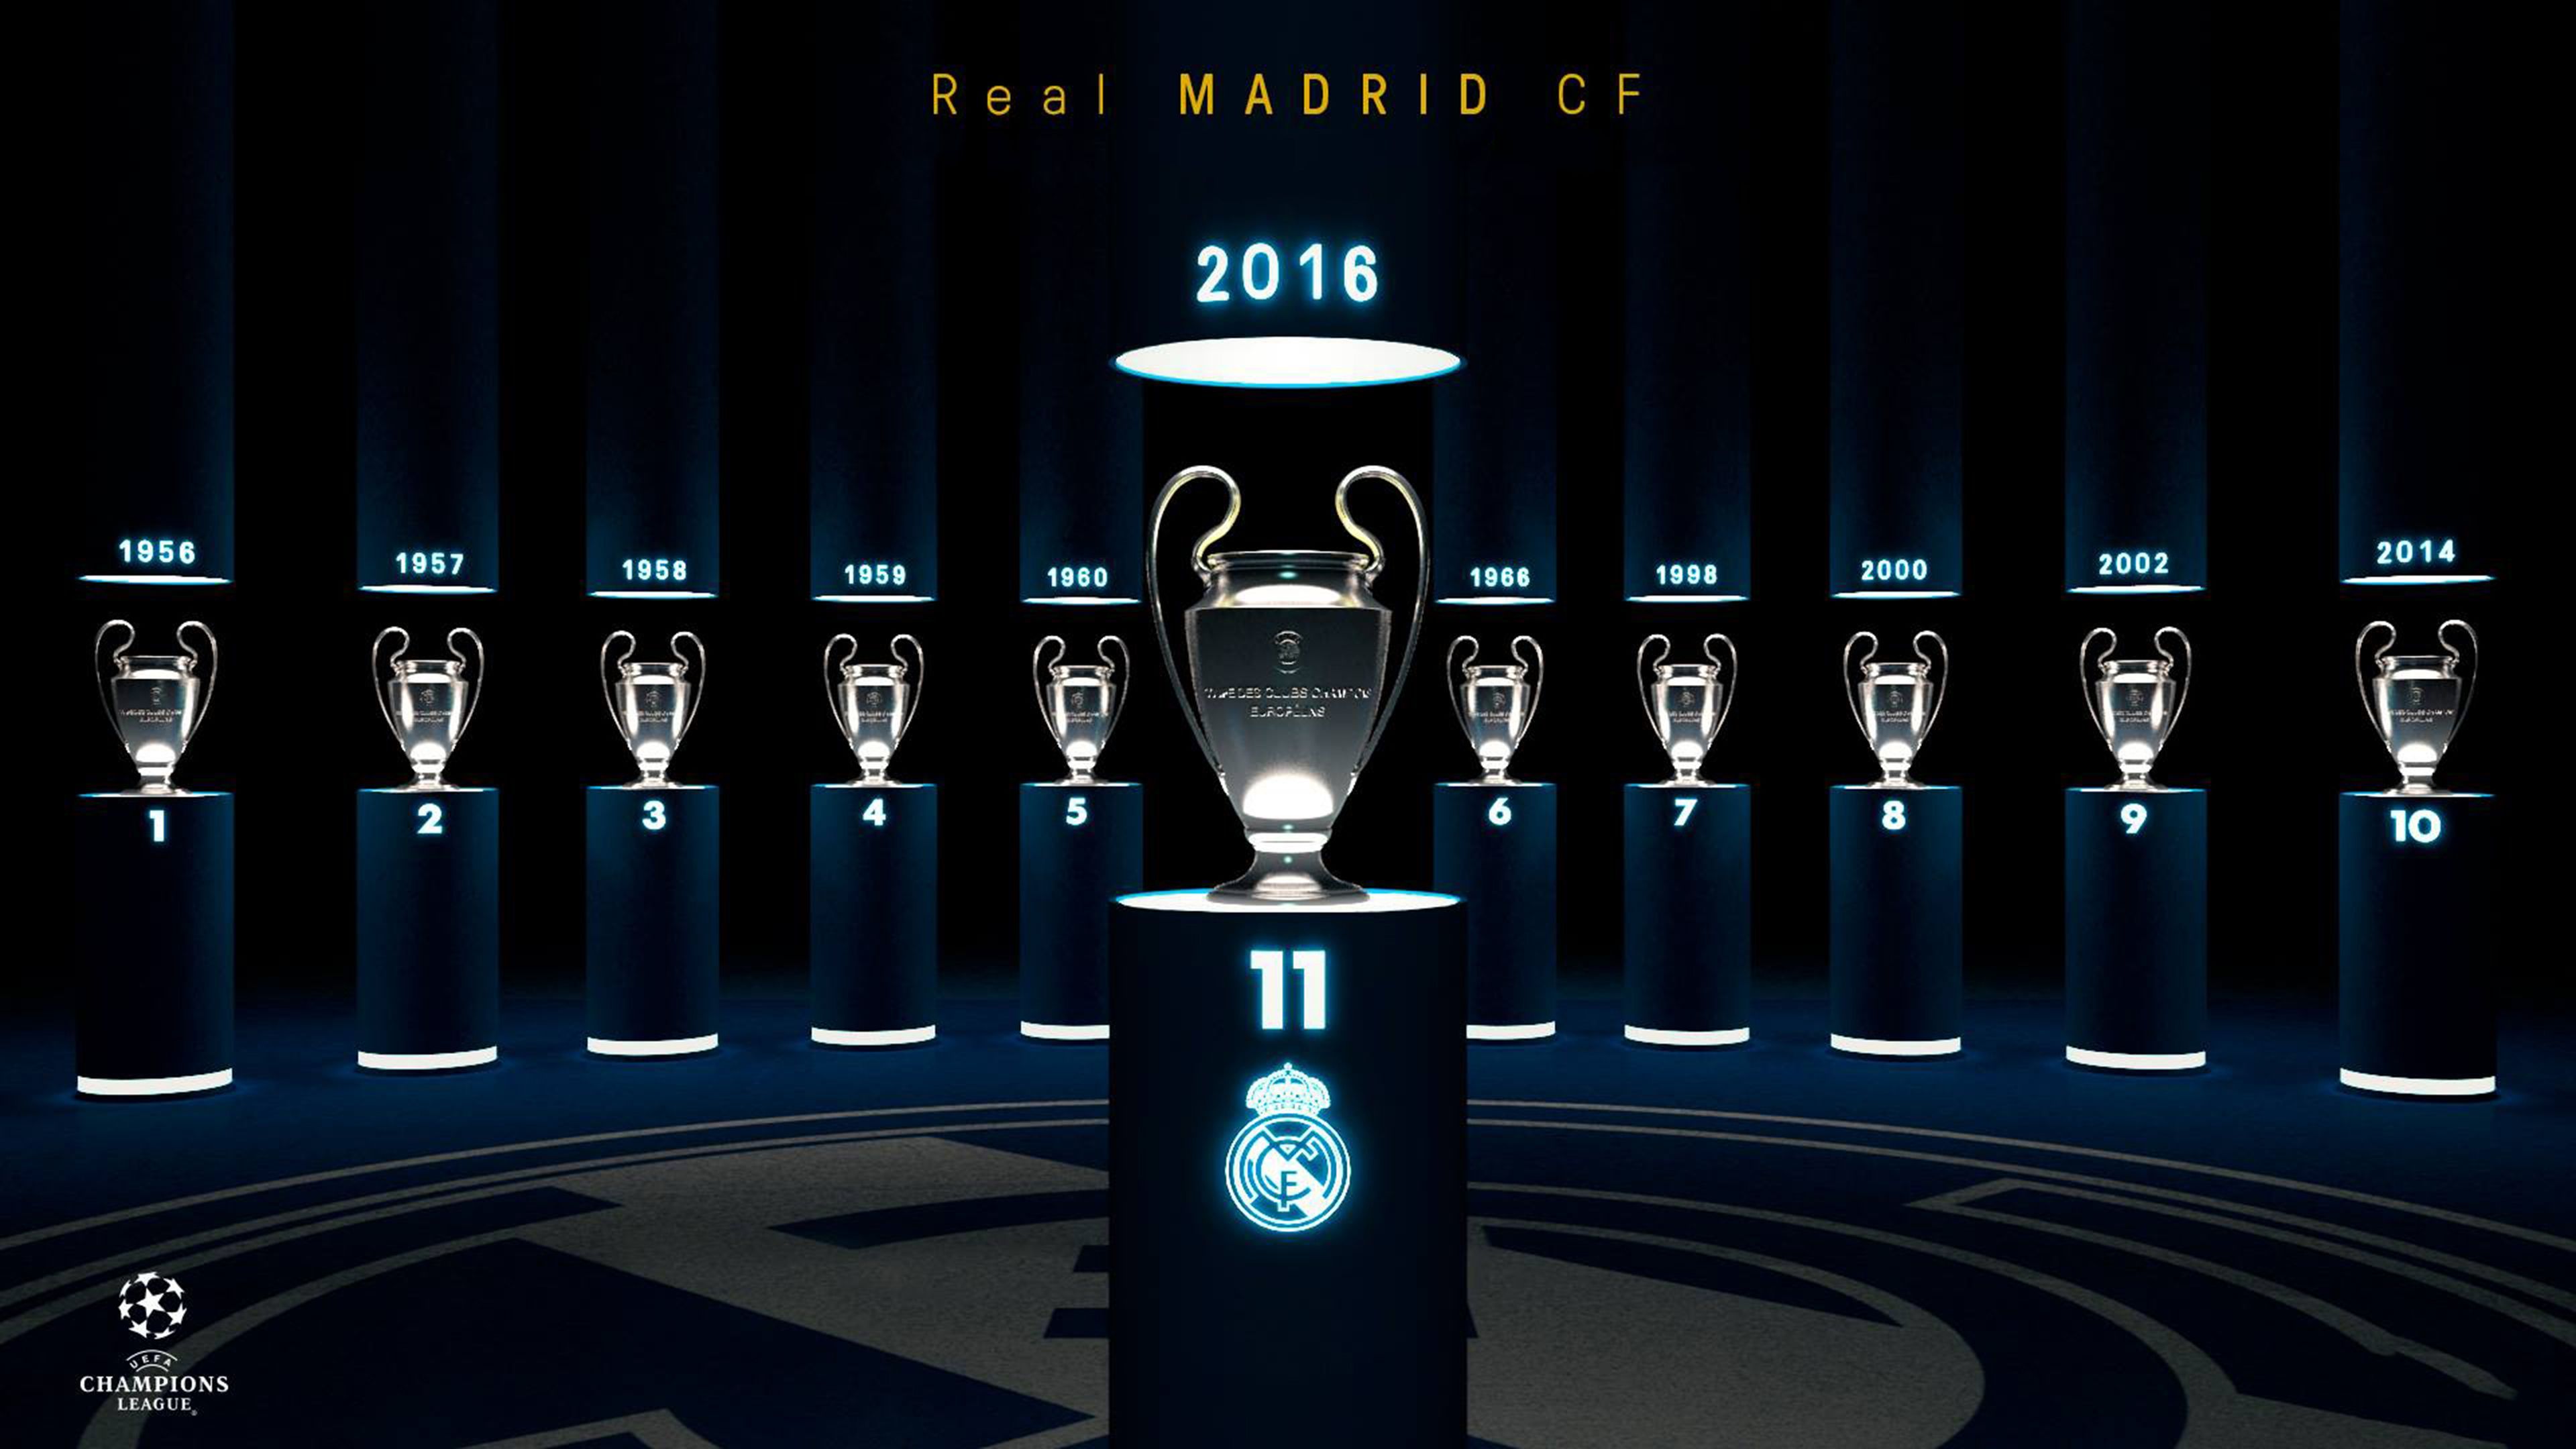 Real Madrid Trophies Wallpaper HD. Real madrid wallpaper, Madrid wallpaper, Real madrid